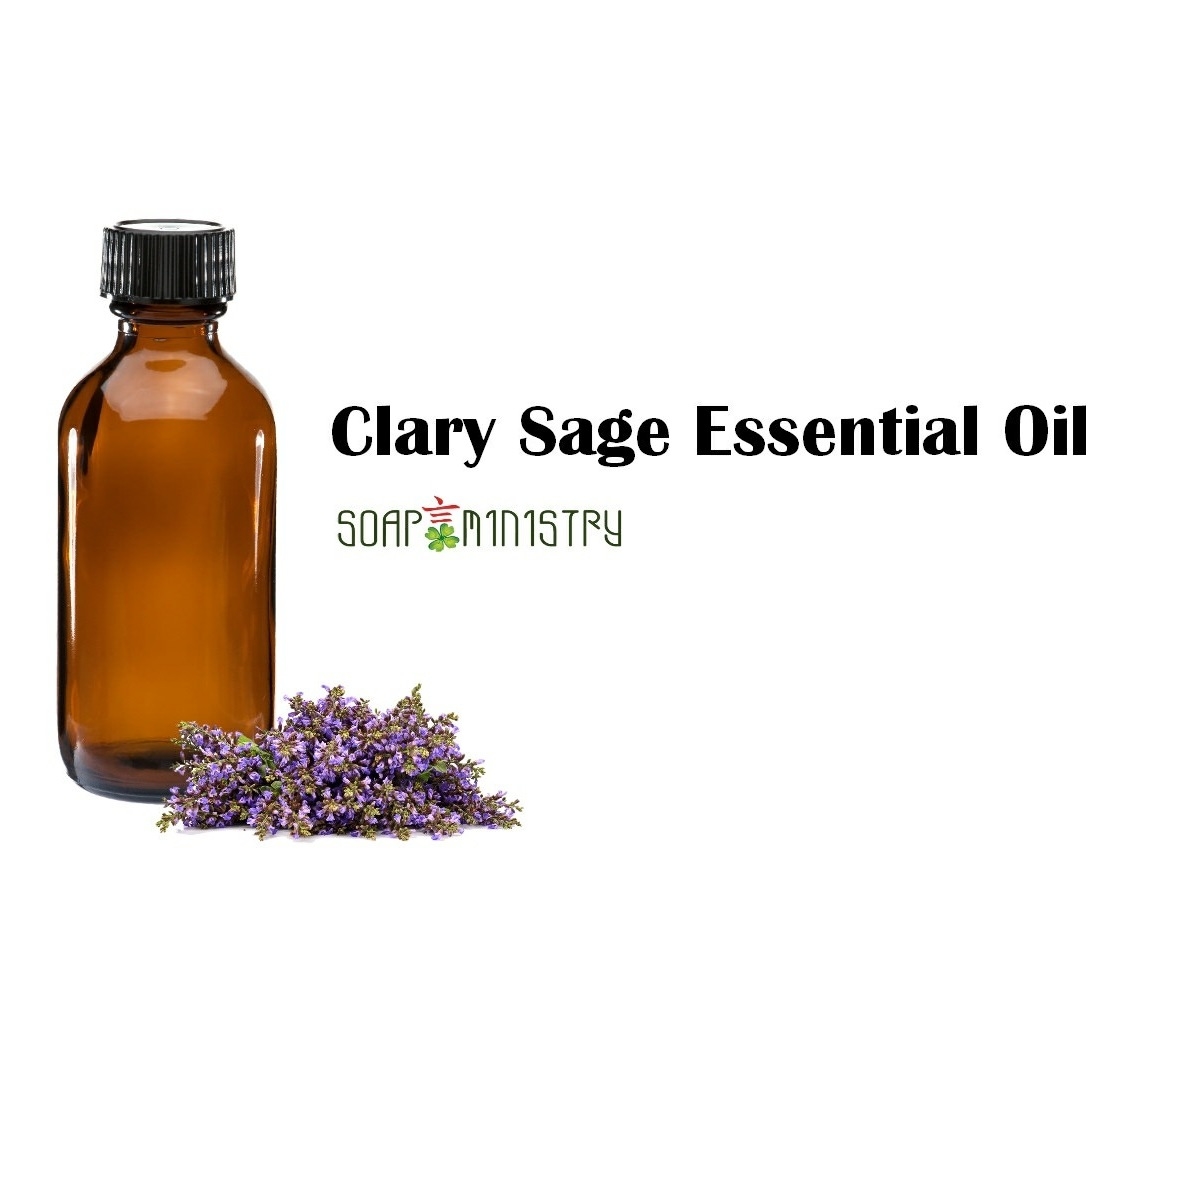 Clary sage Essential Oil 500ml